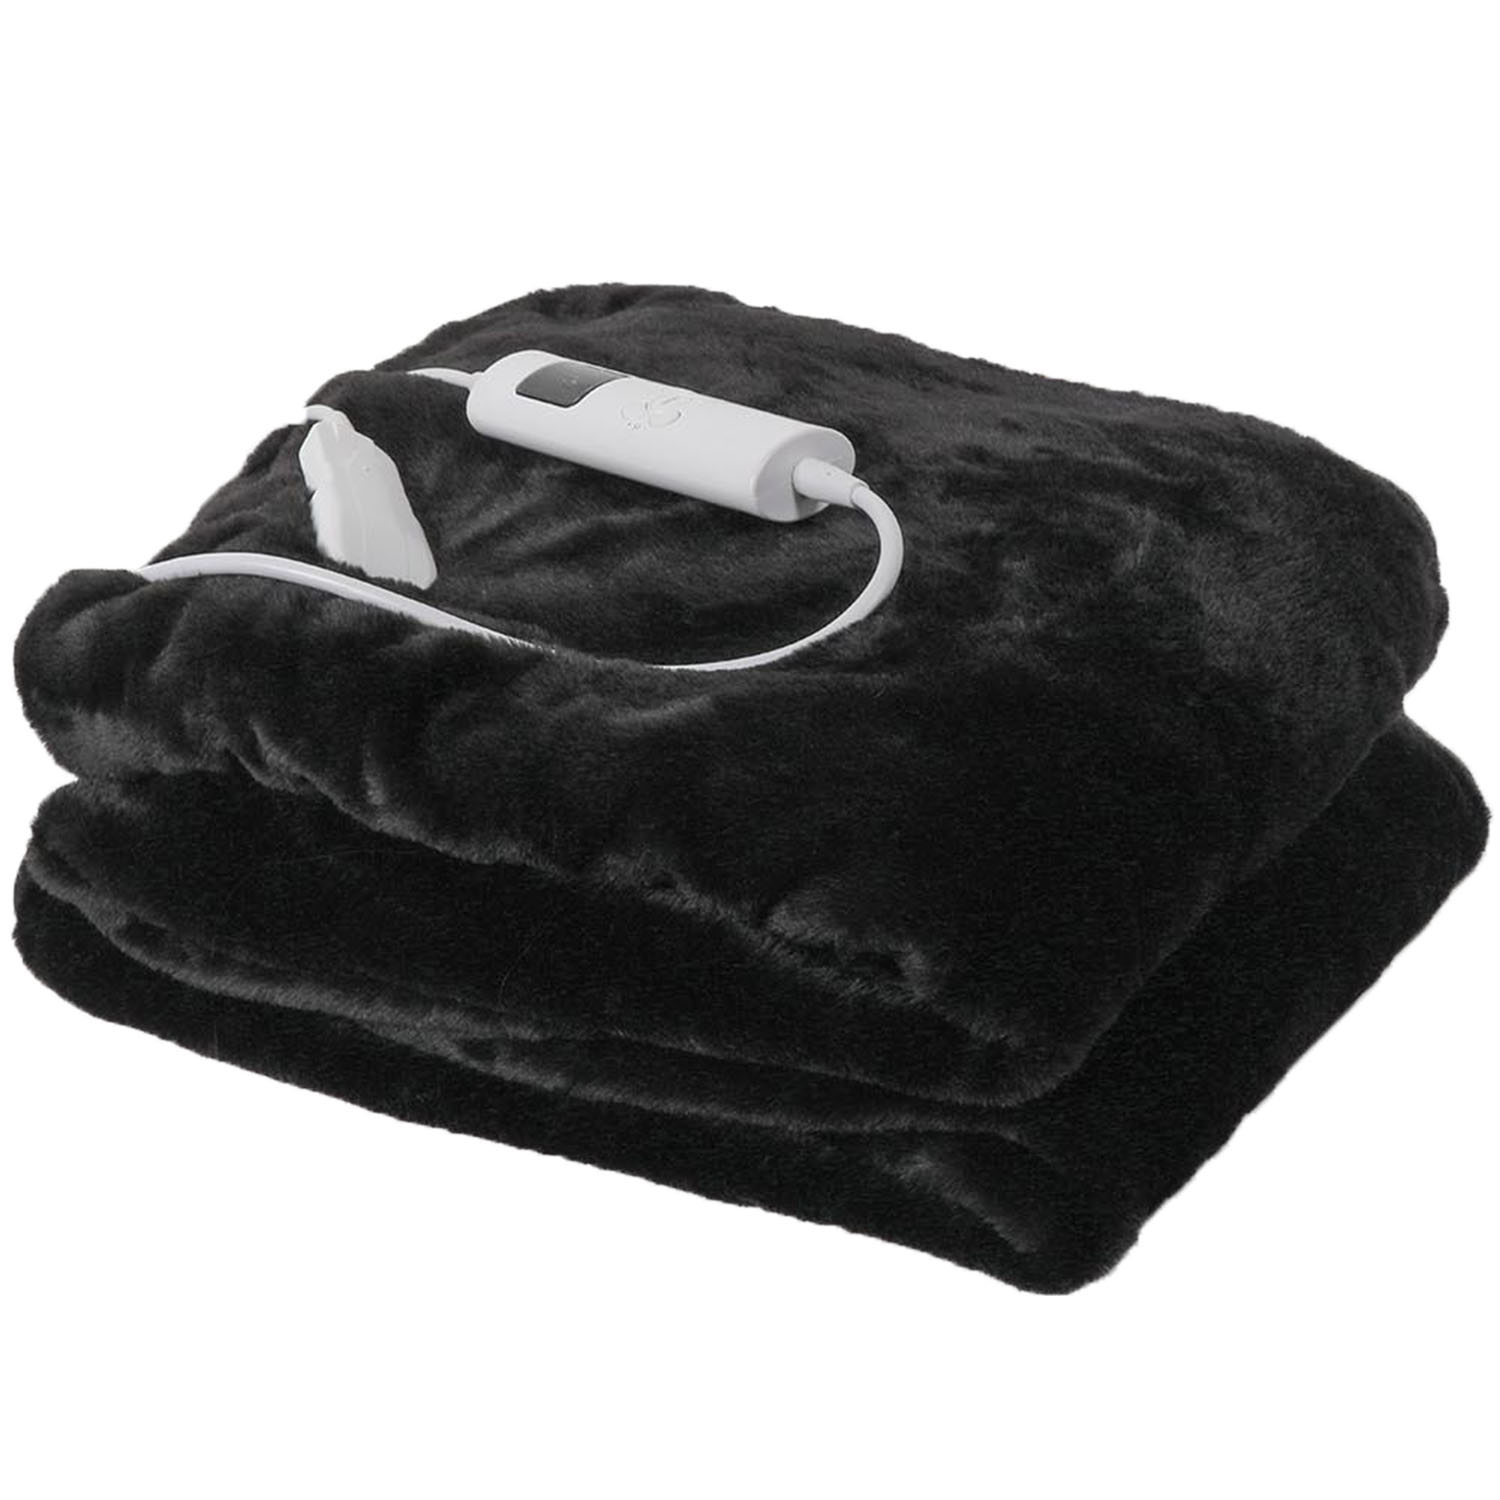 Black Faux Fur Heated Electric Blanket Image 1